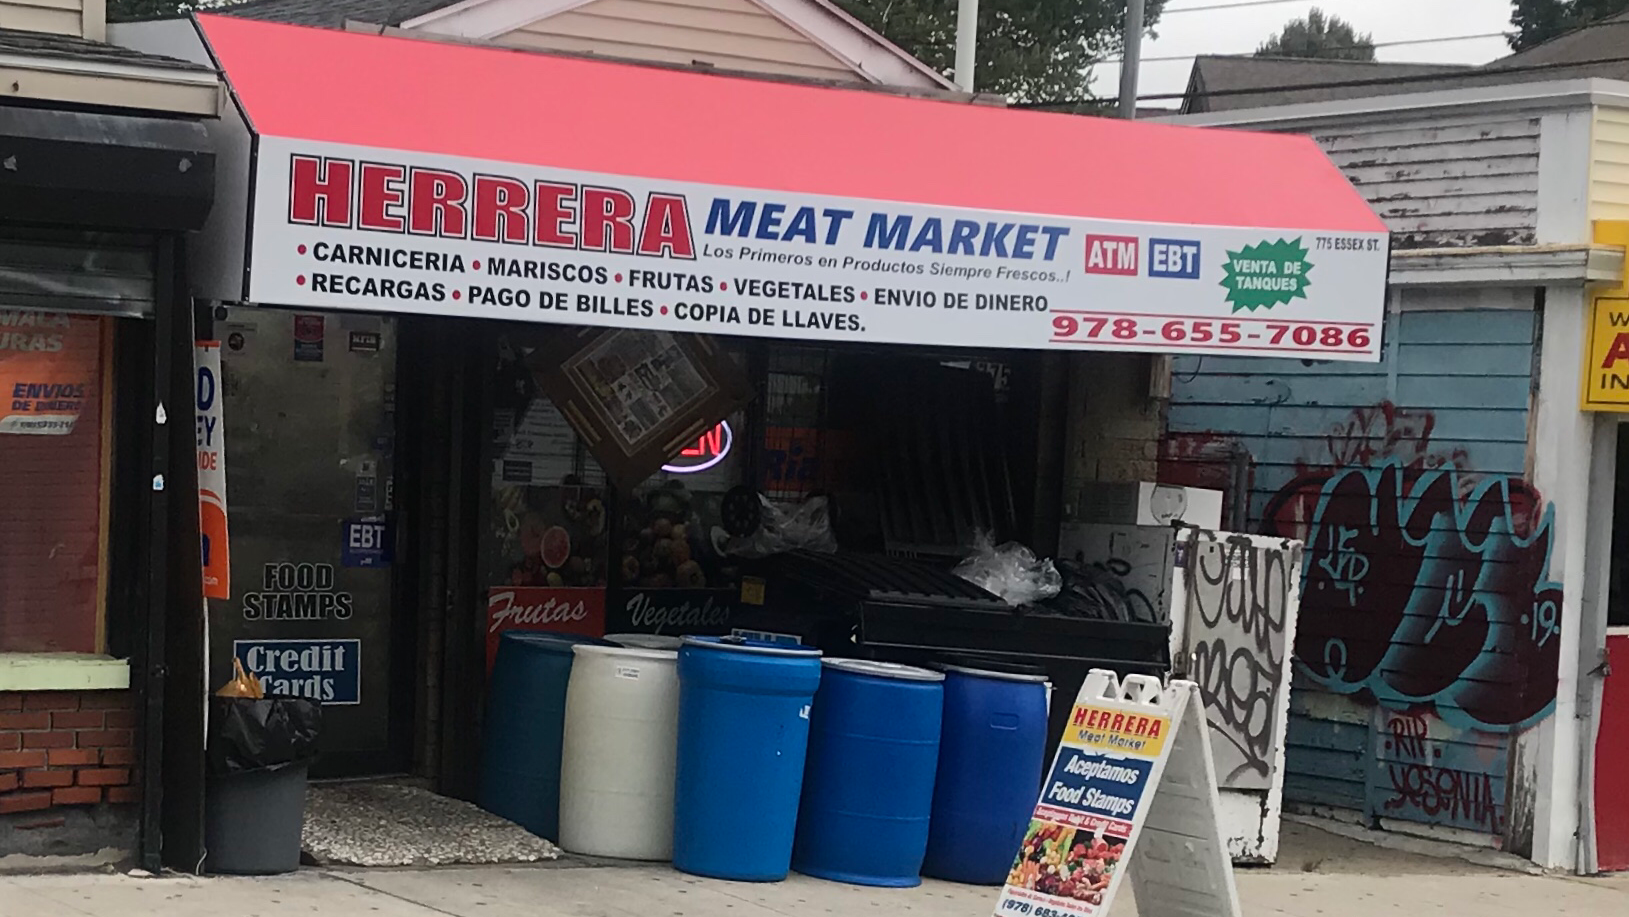 Herrera meat market